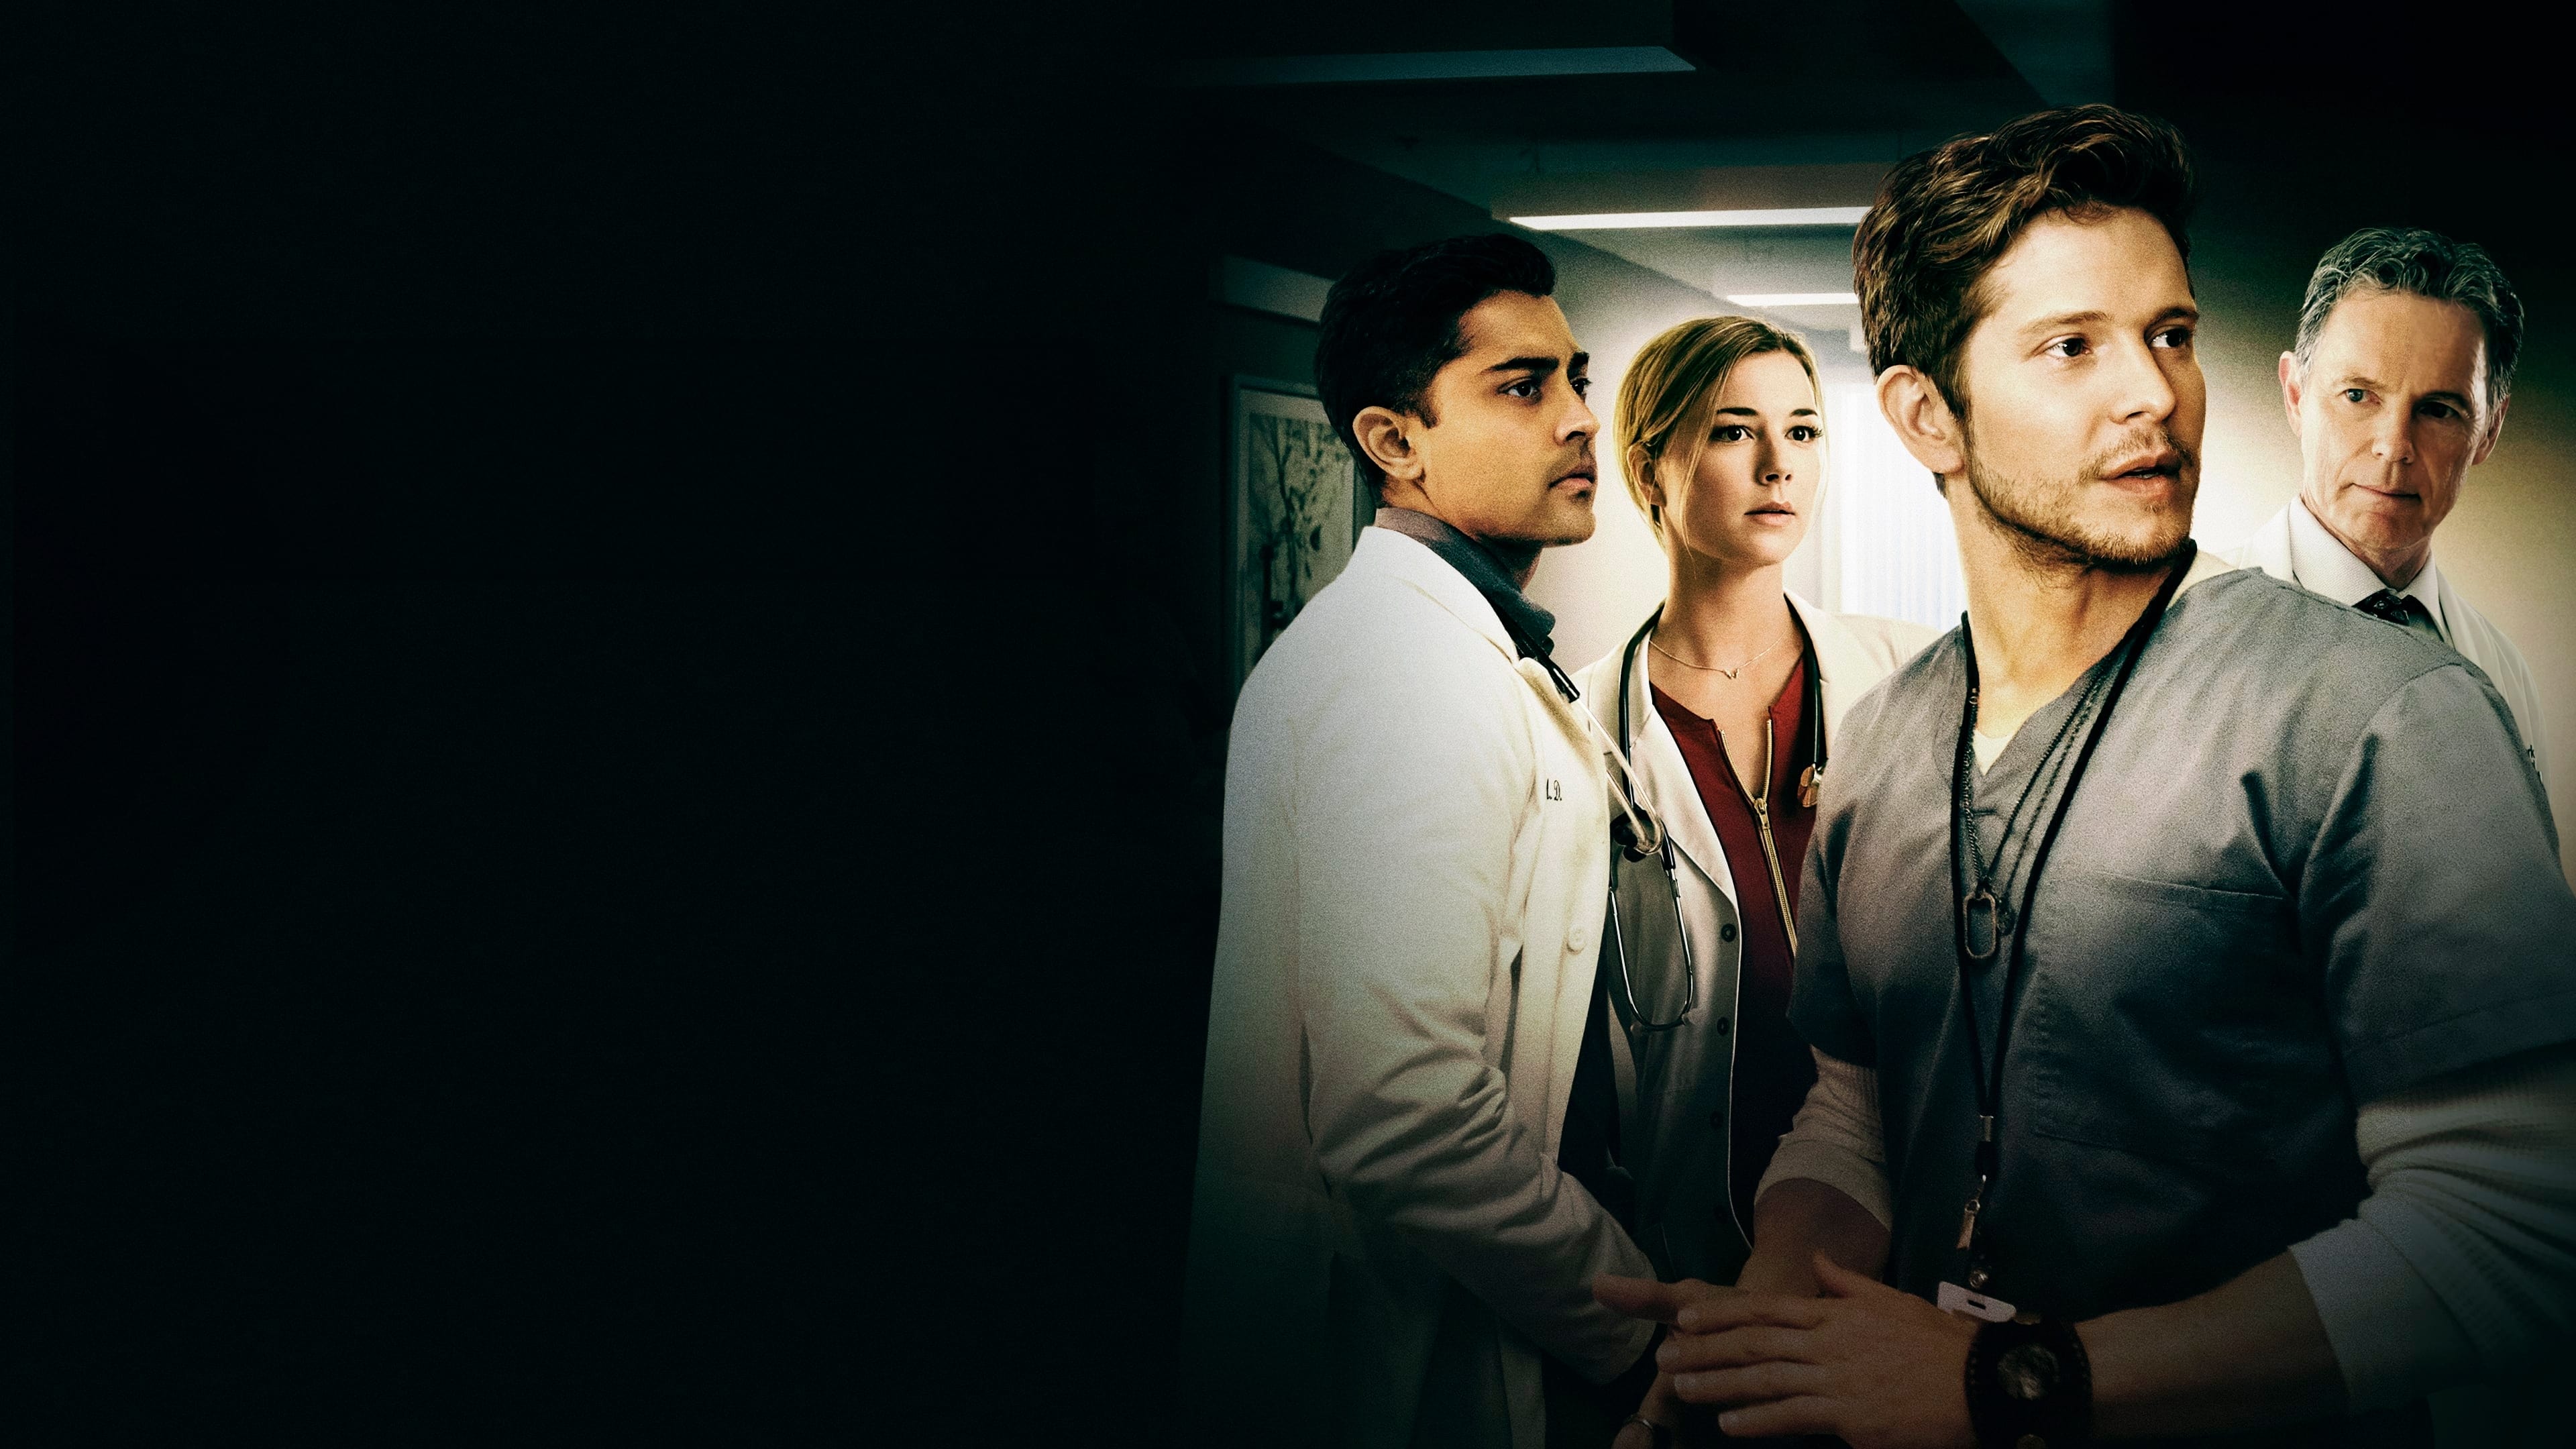 Atlanta Medical - Season 6